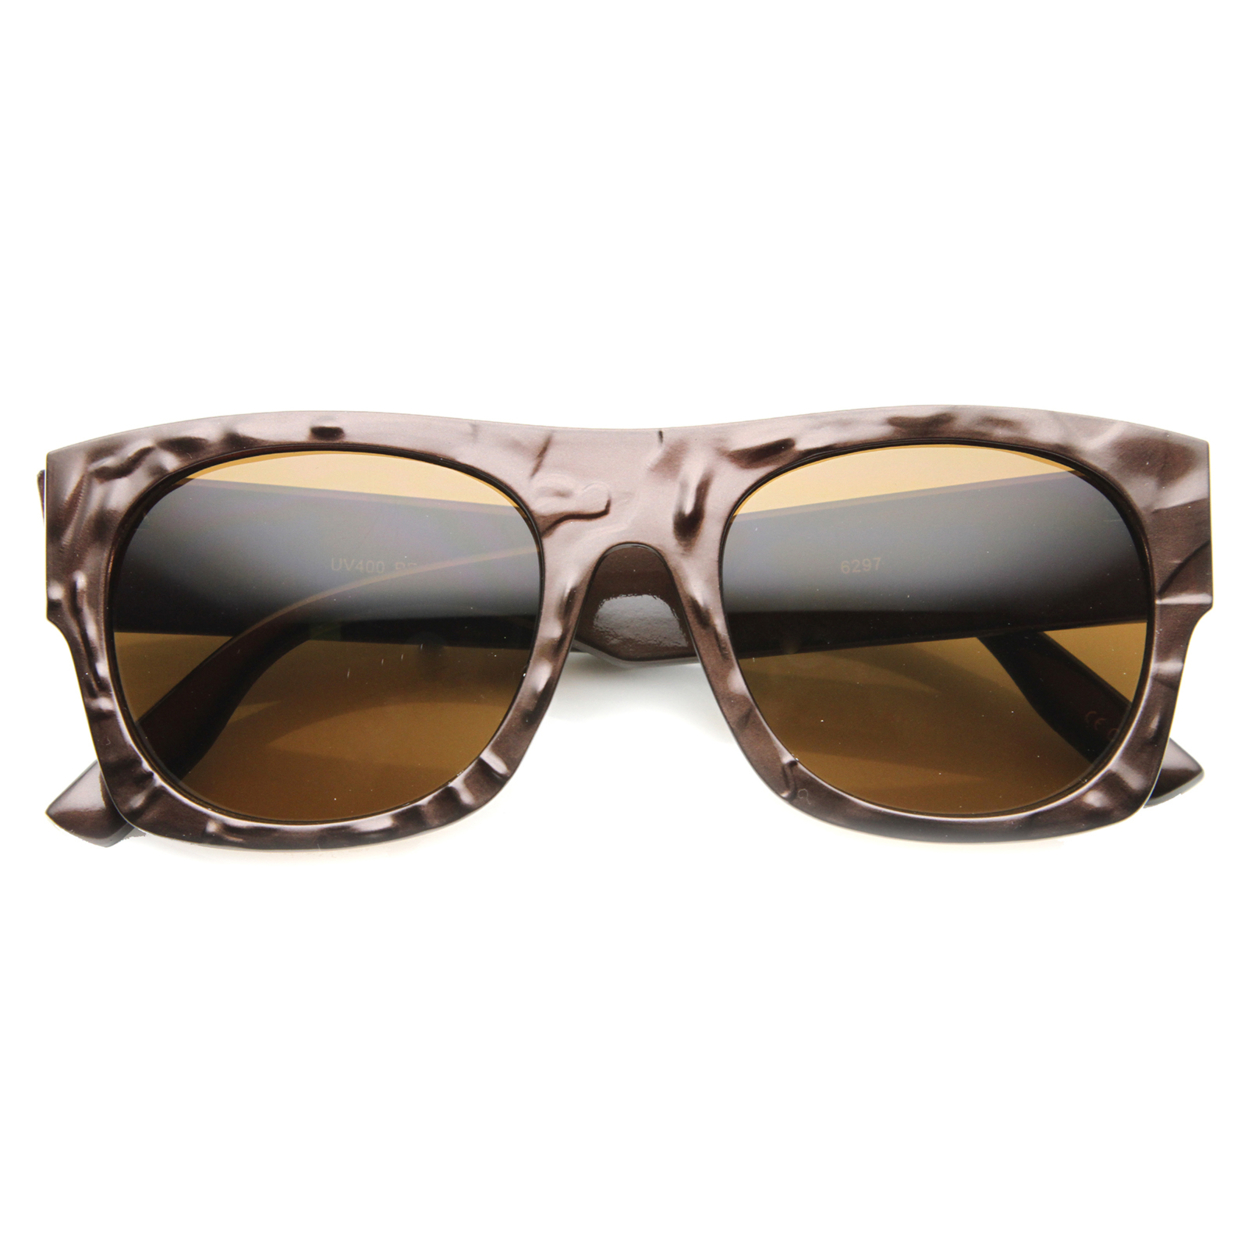 Unisex Rectangular Sunglasses With UV400 Protected Composite Lens 9865 - Shiny Black / Lavender